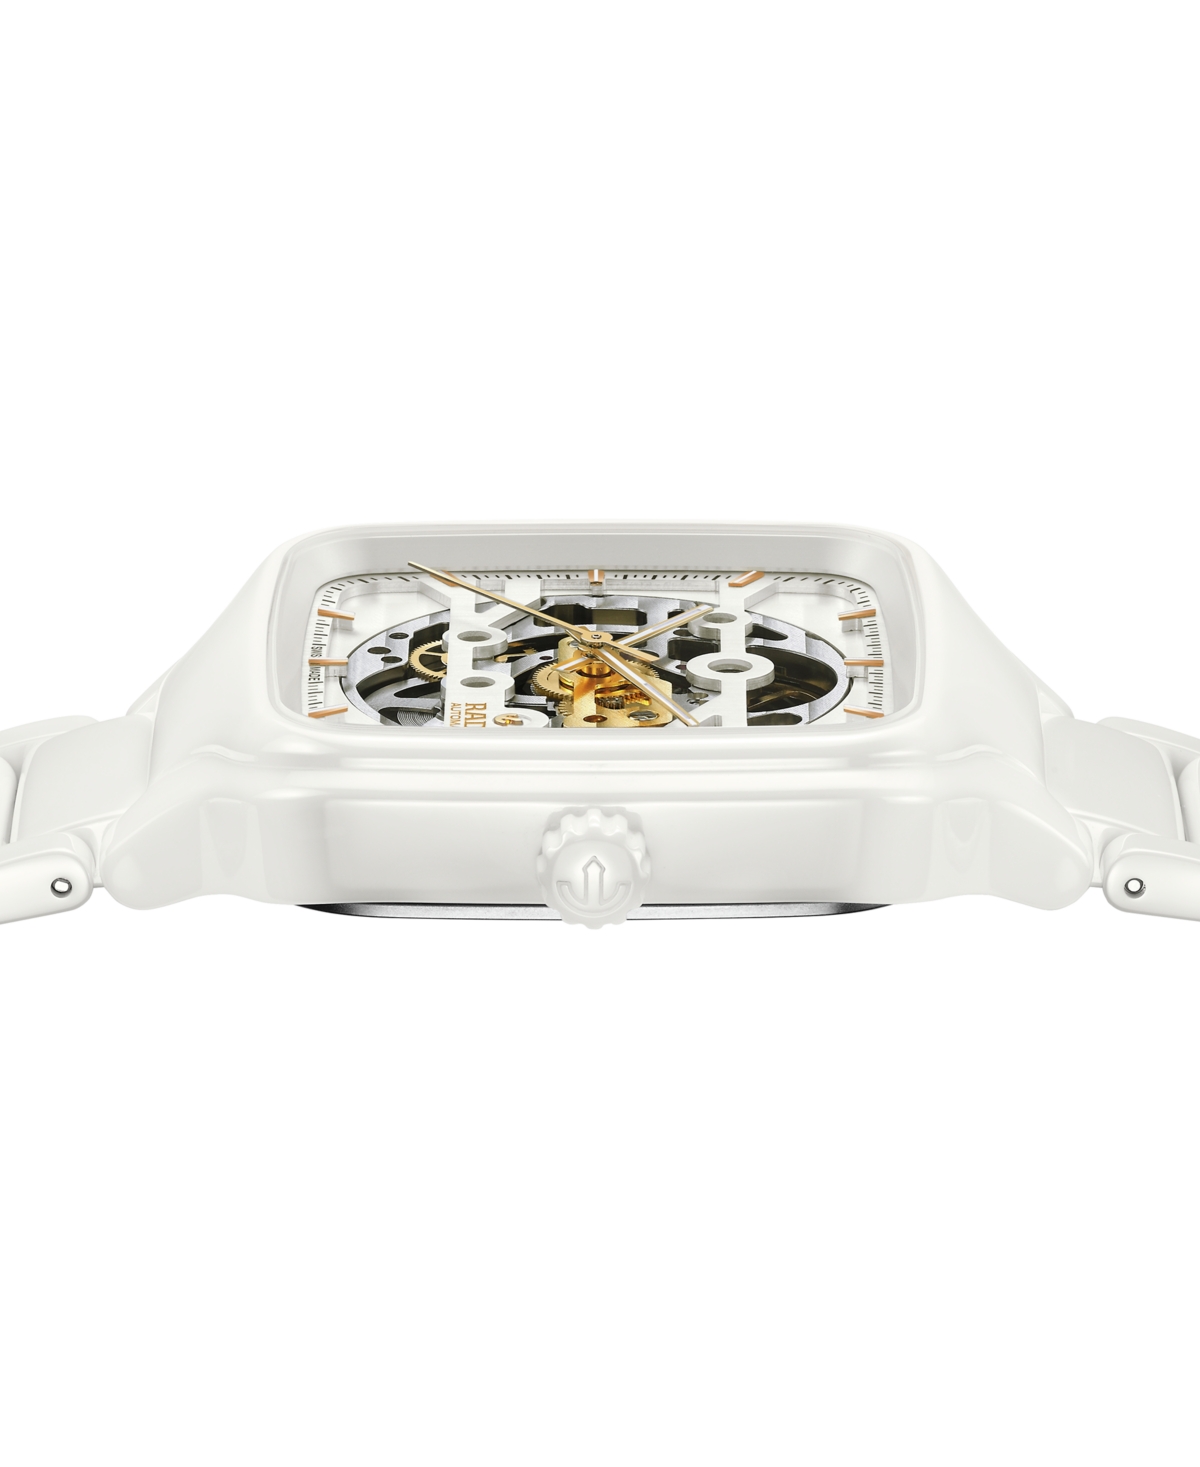 Shop Rado Unisex Swiss Automatic True Square Skeleton White High-tech Ceramic Bracelet Watch 38mm